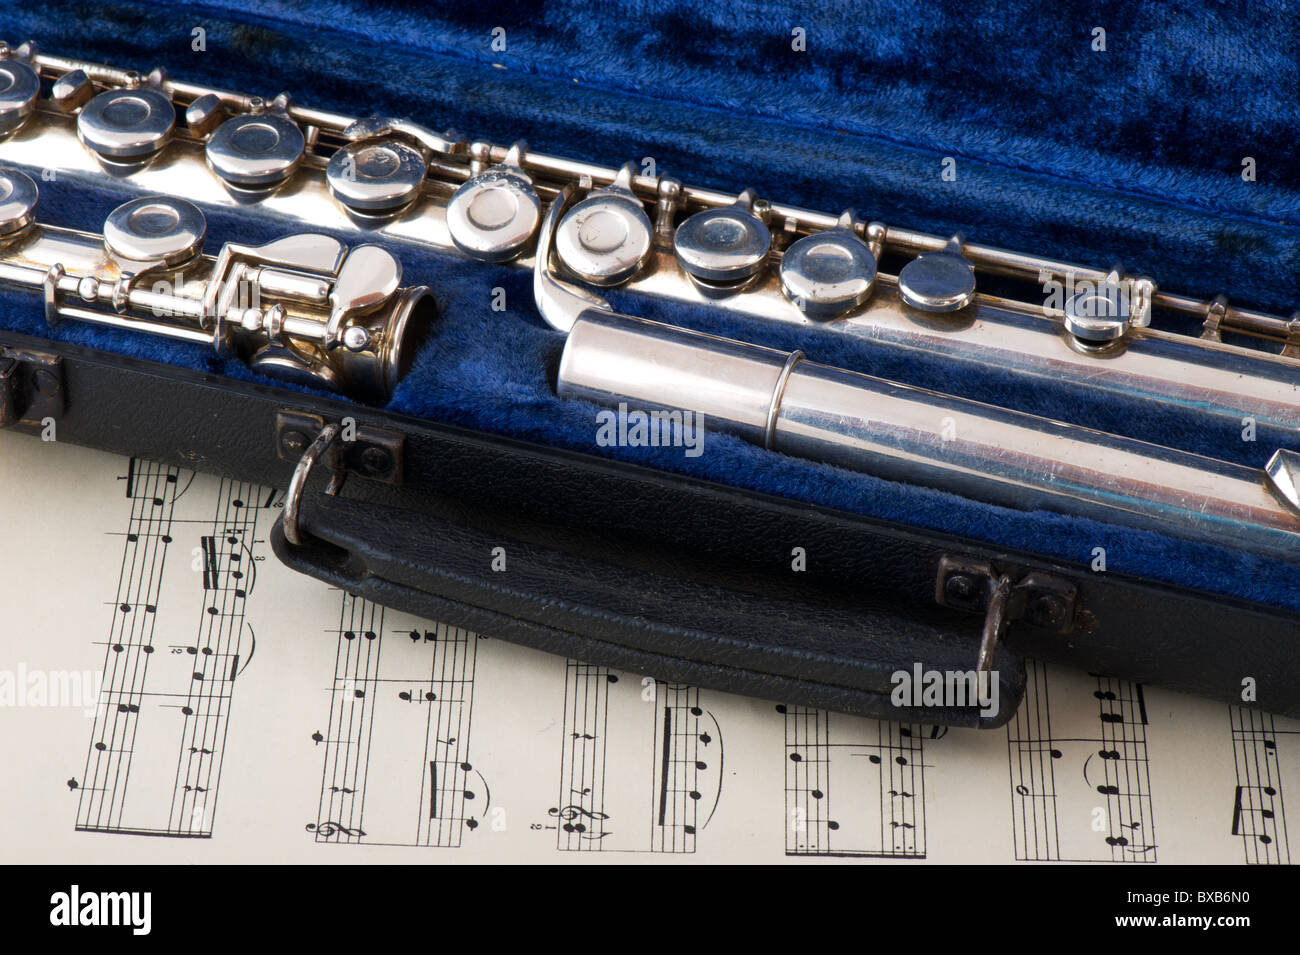 artley flute serial number 199770 worth